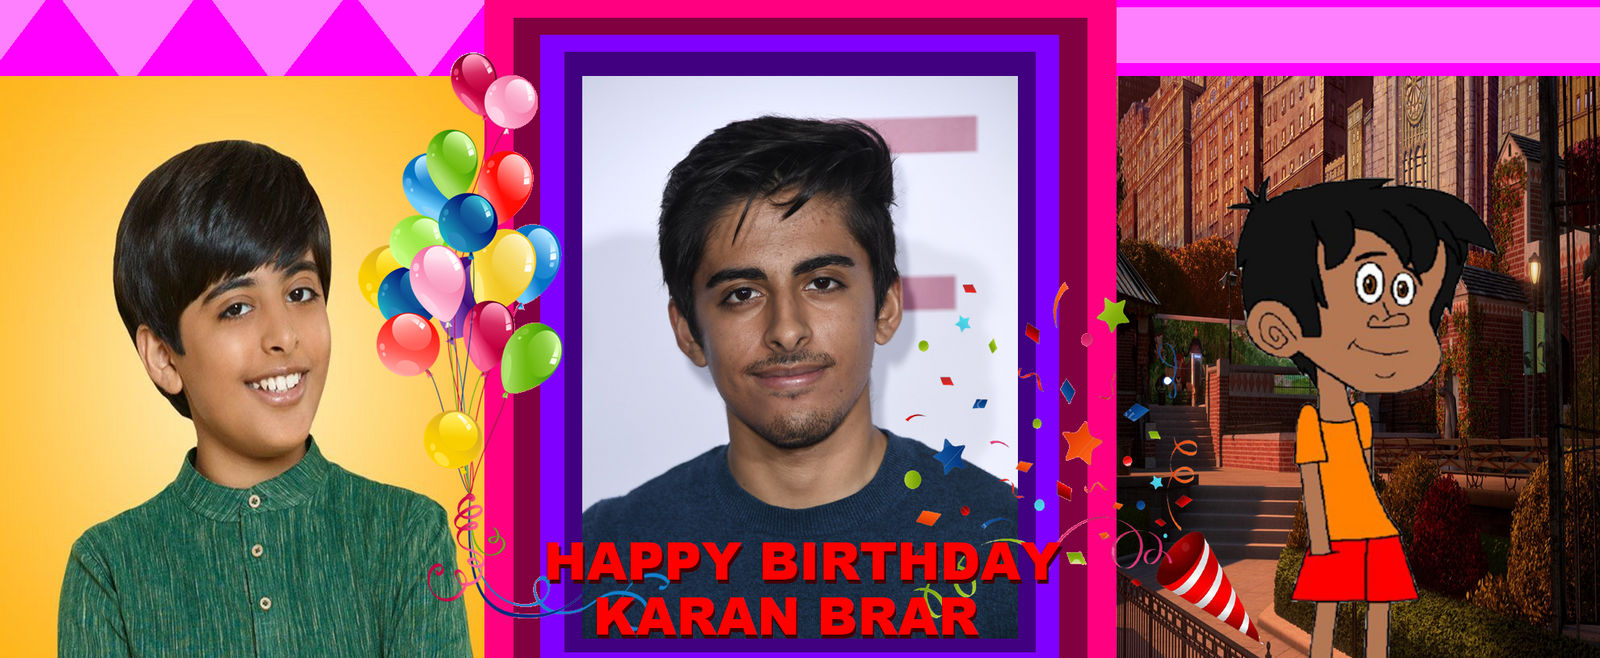 Happy Birthday Karan Brar by aaronhardy523 on DeviantArt